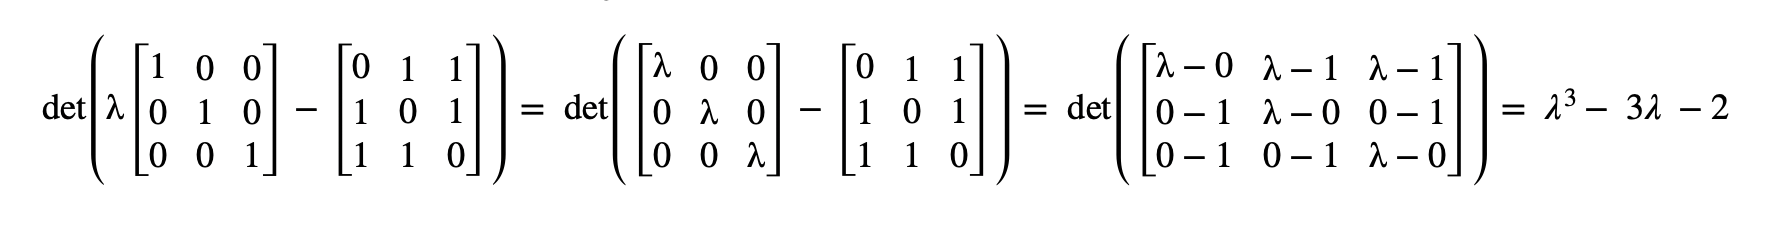 eigenvalue-calculation